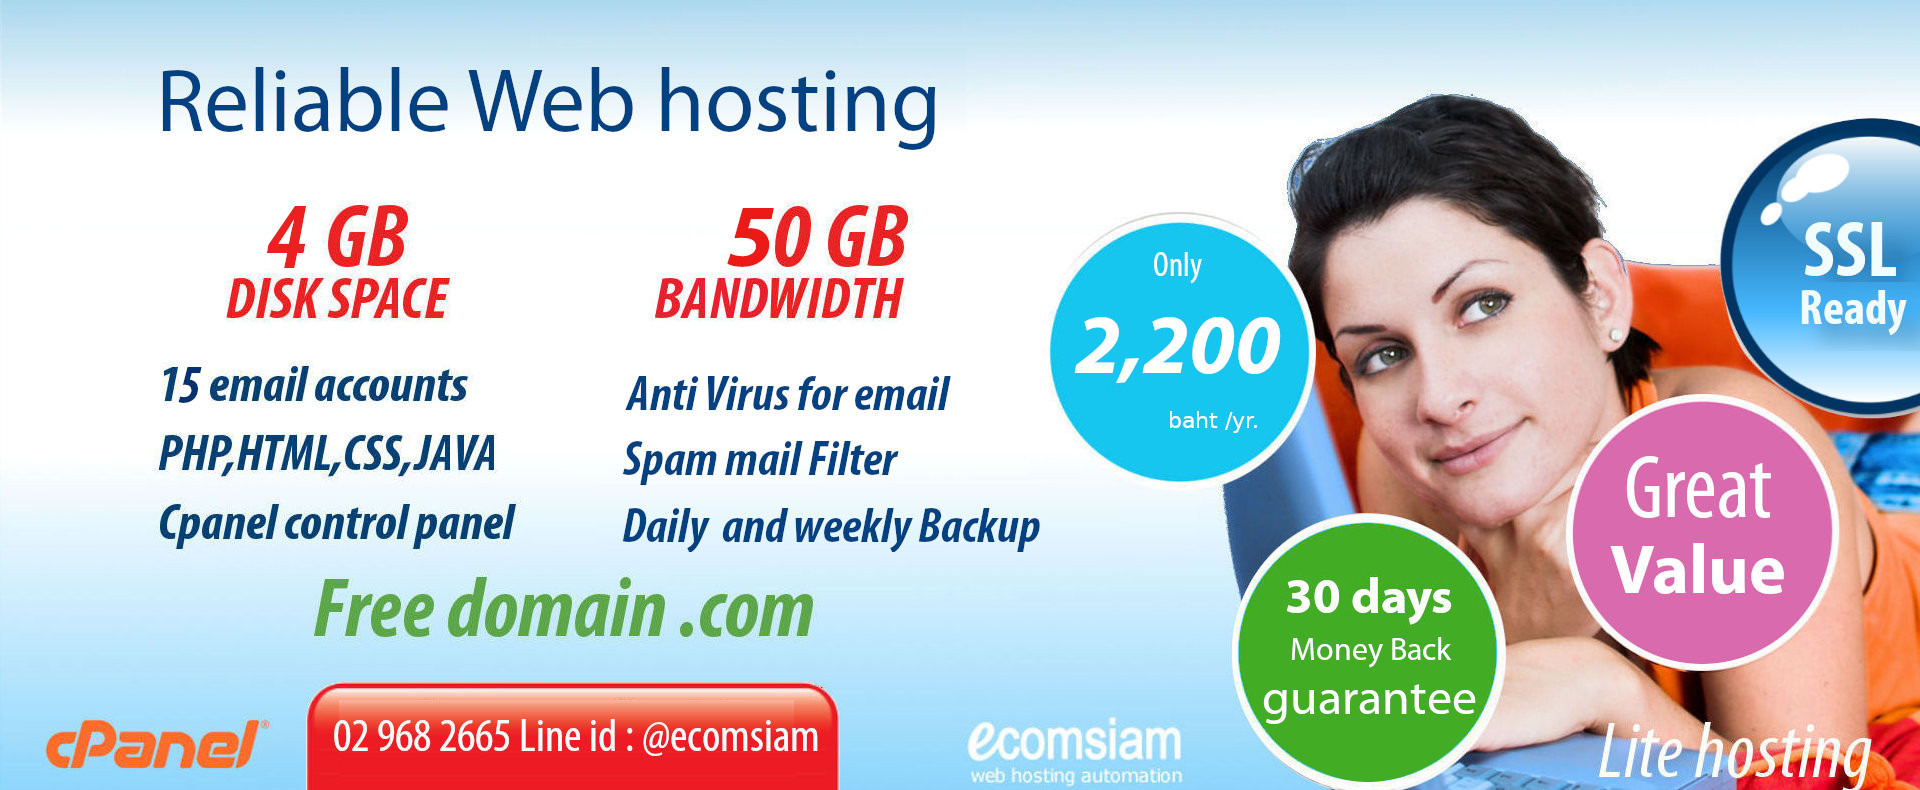 lite hosting thai ไทย - พื้นที่มากถึง 2 GB/10 email เพียง 1600 บาทต่อปี ฟรี! โดเมน พร้อมใบรับรอง SSL